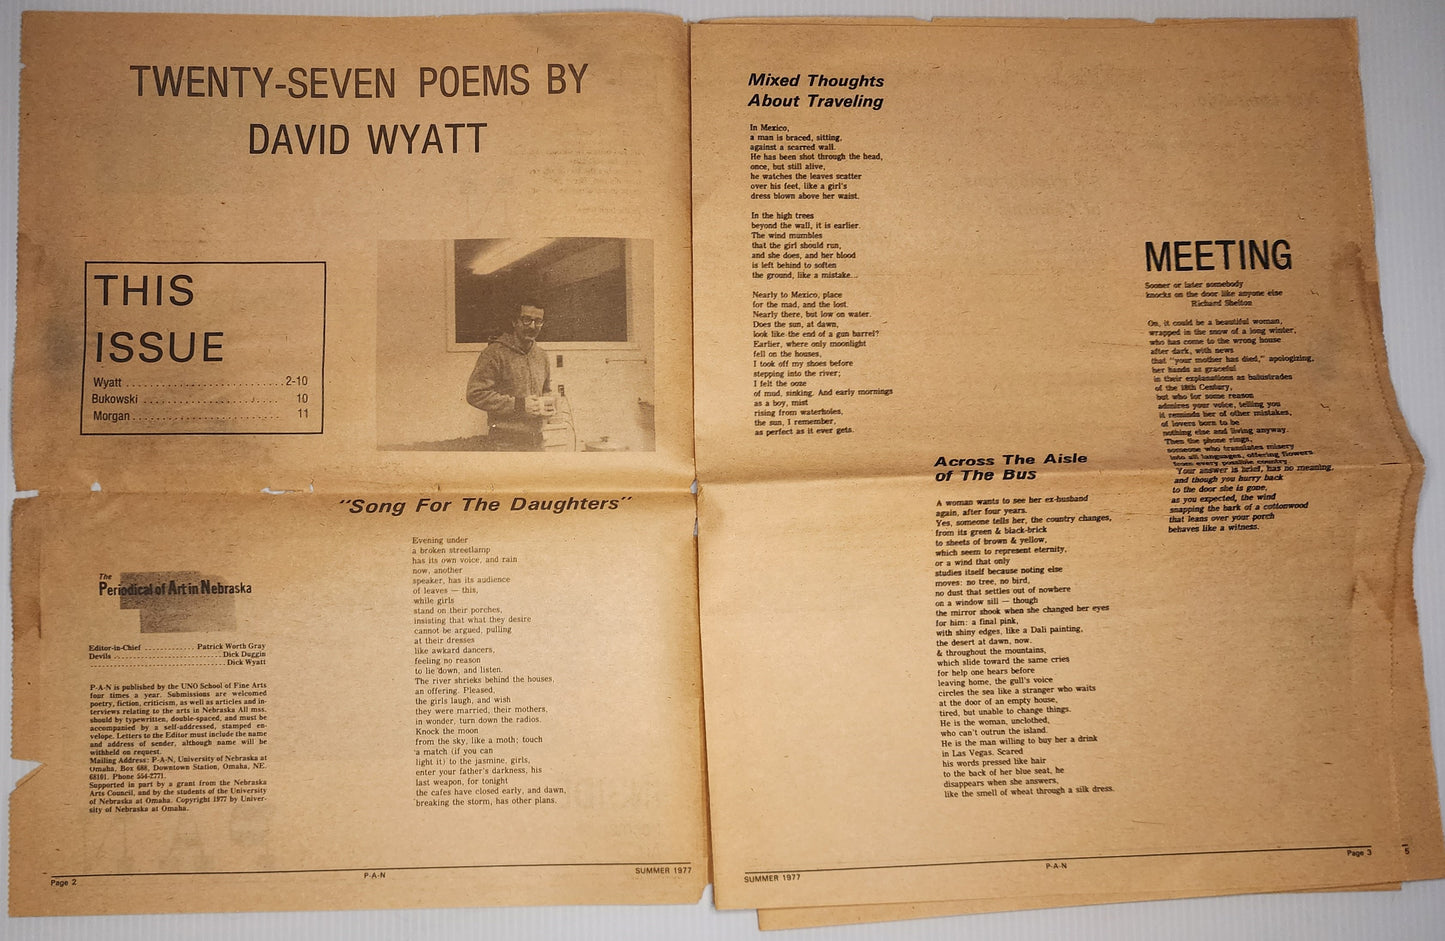 The Periodical of Art in Nebraska (PAN) -- Uncollected Charles Bukowski Poem (1977)